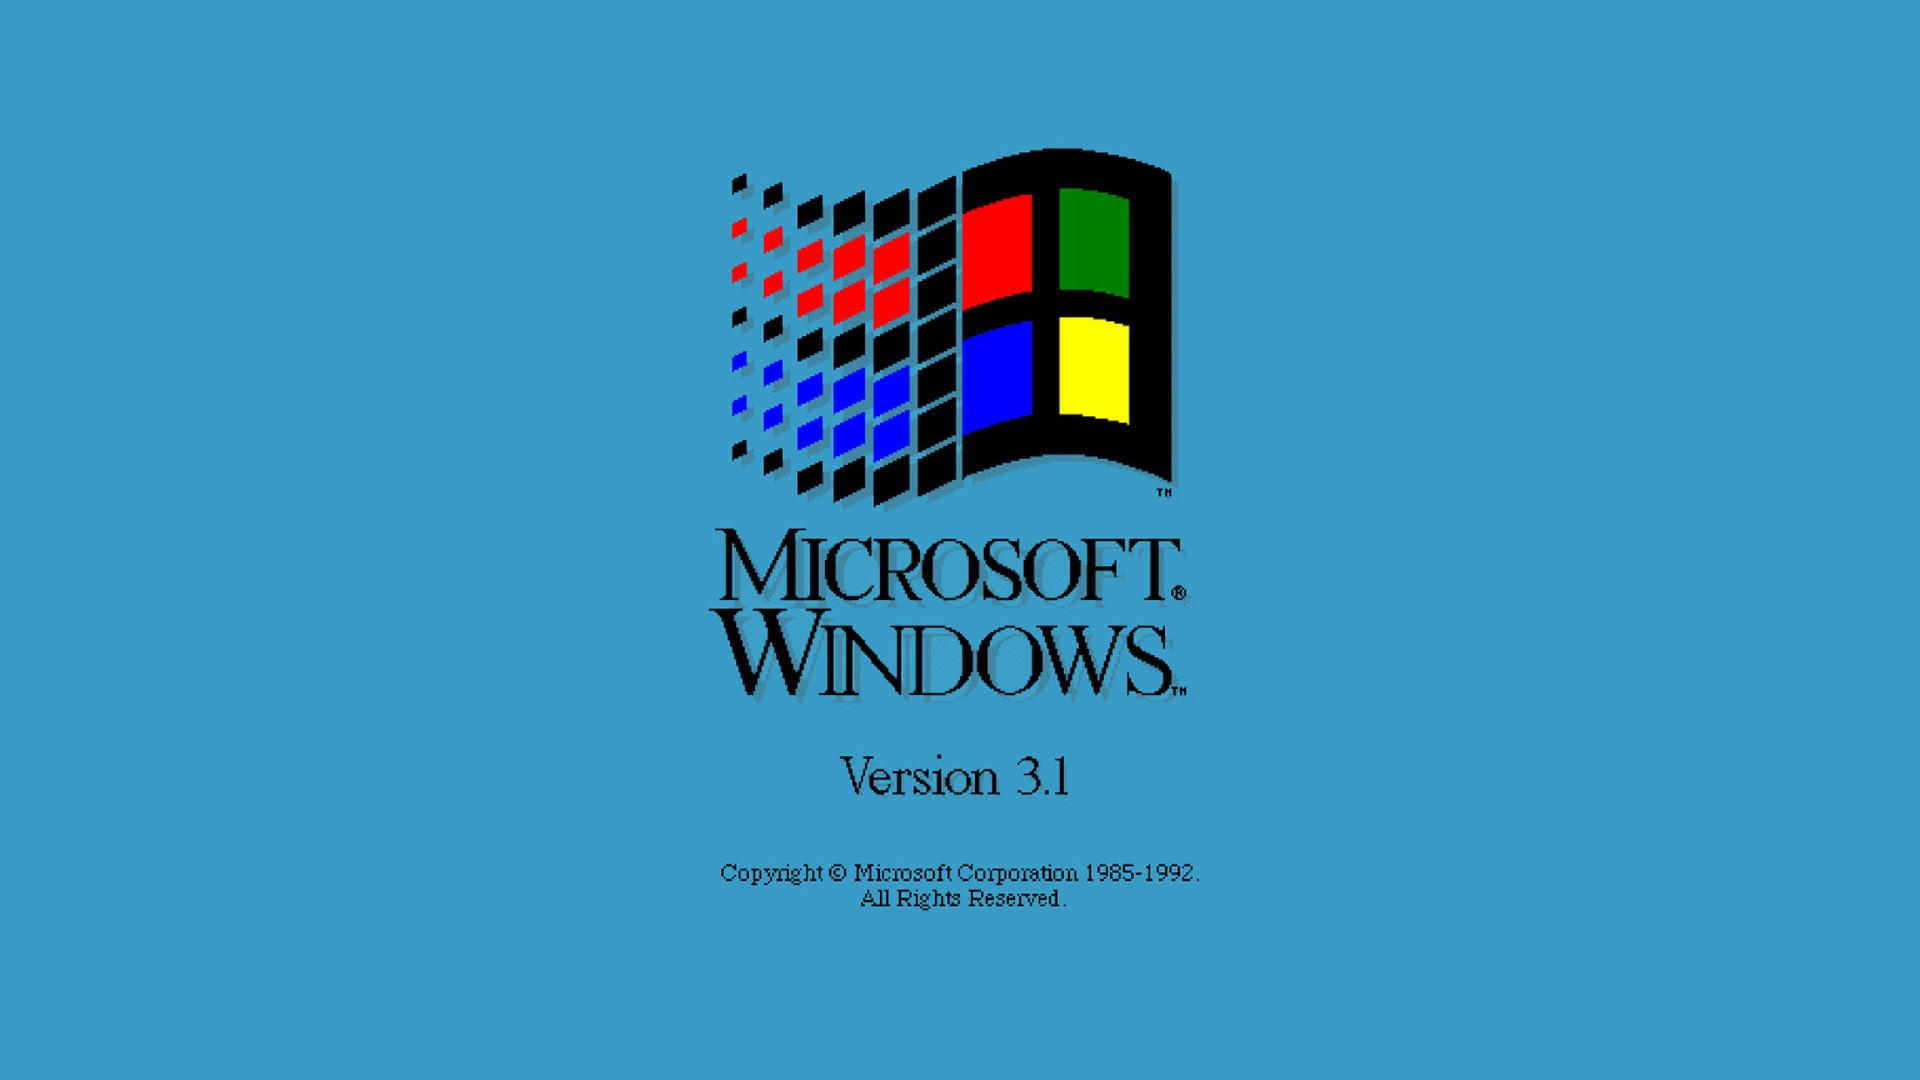 Windows Nt Wallpaper